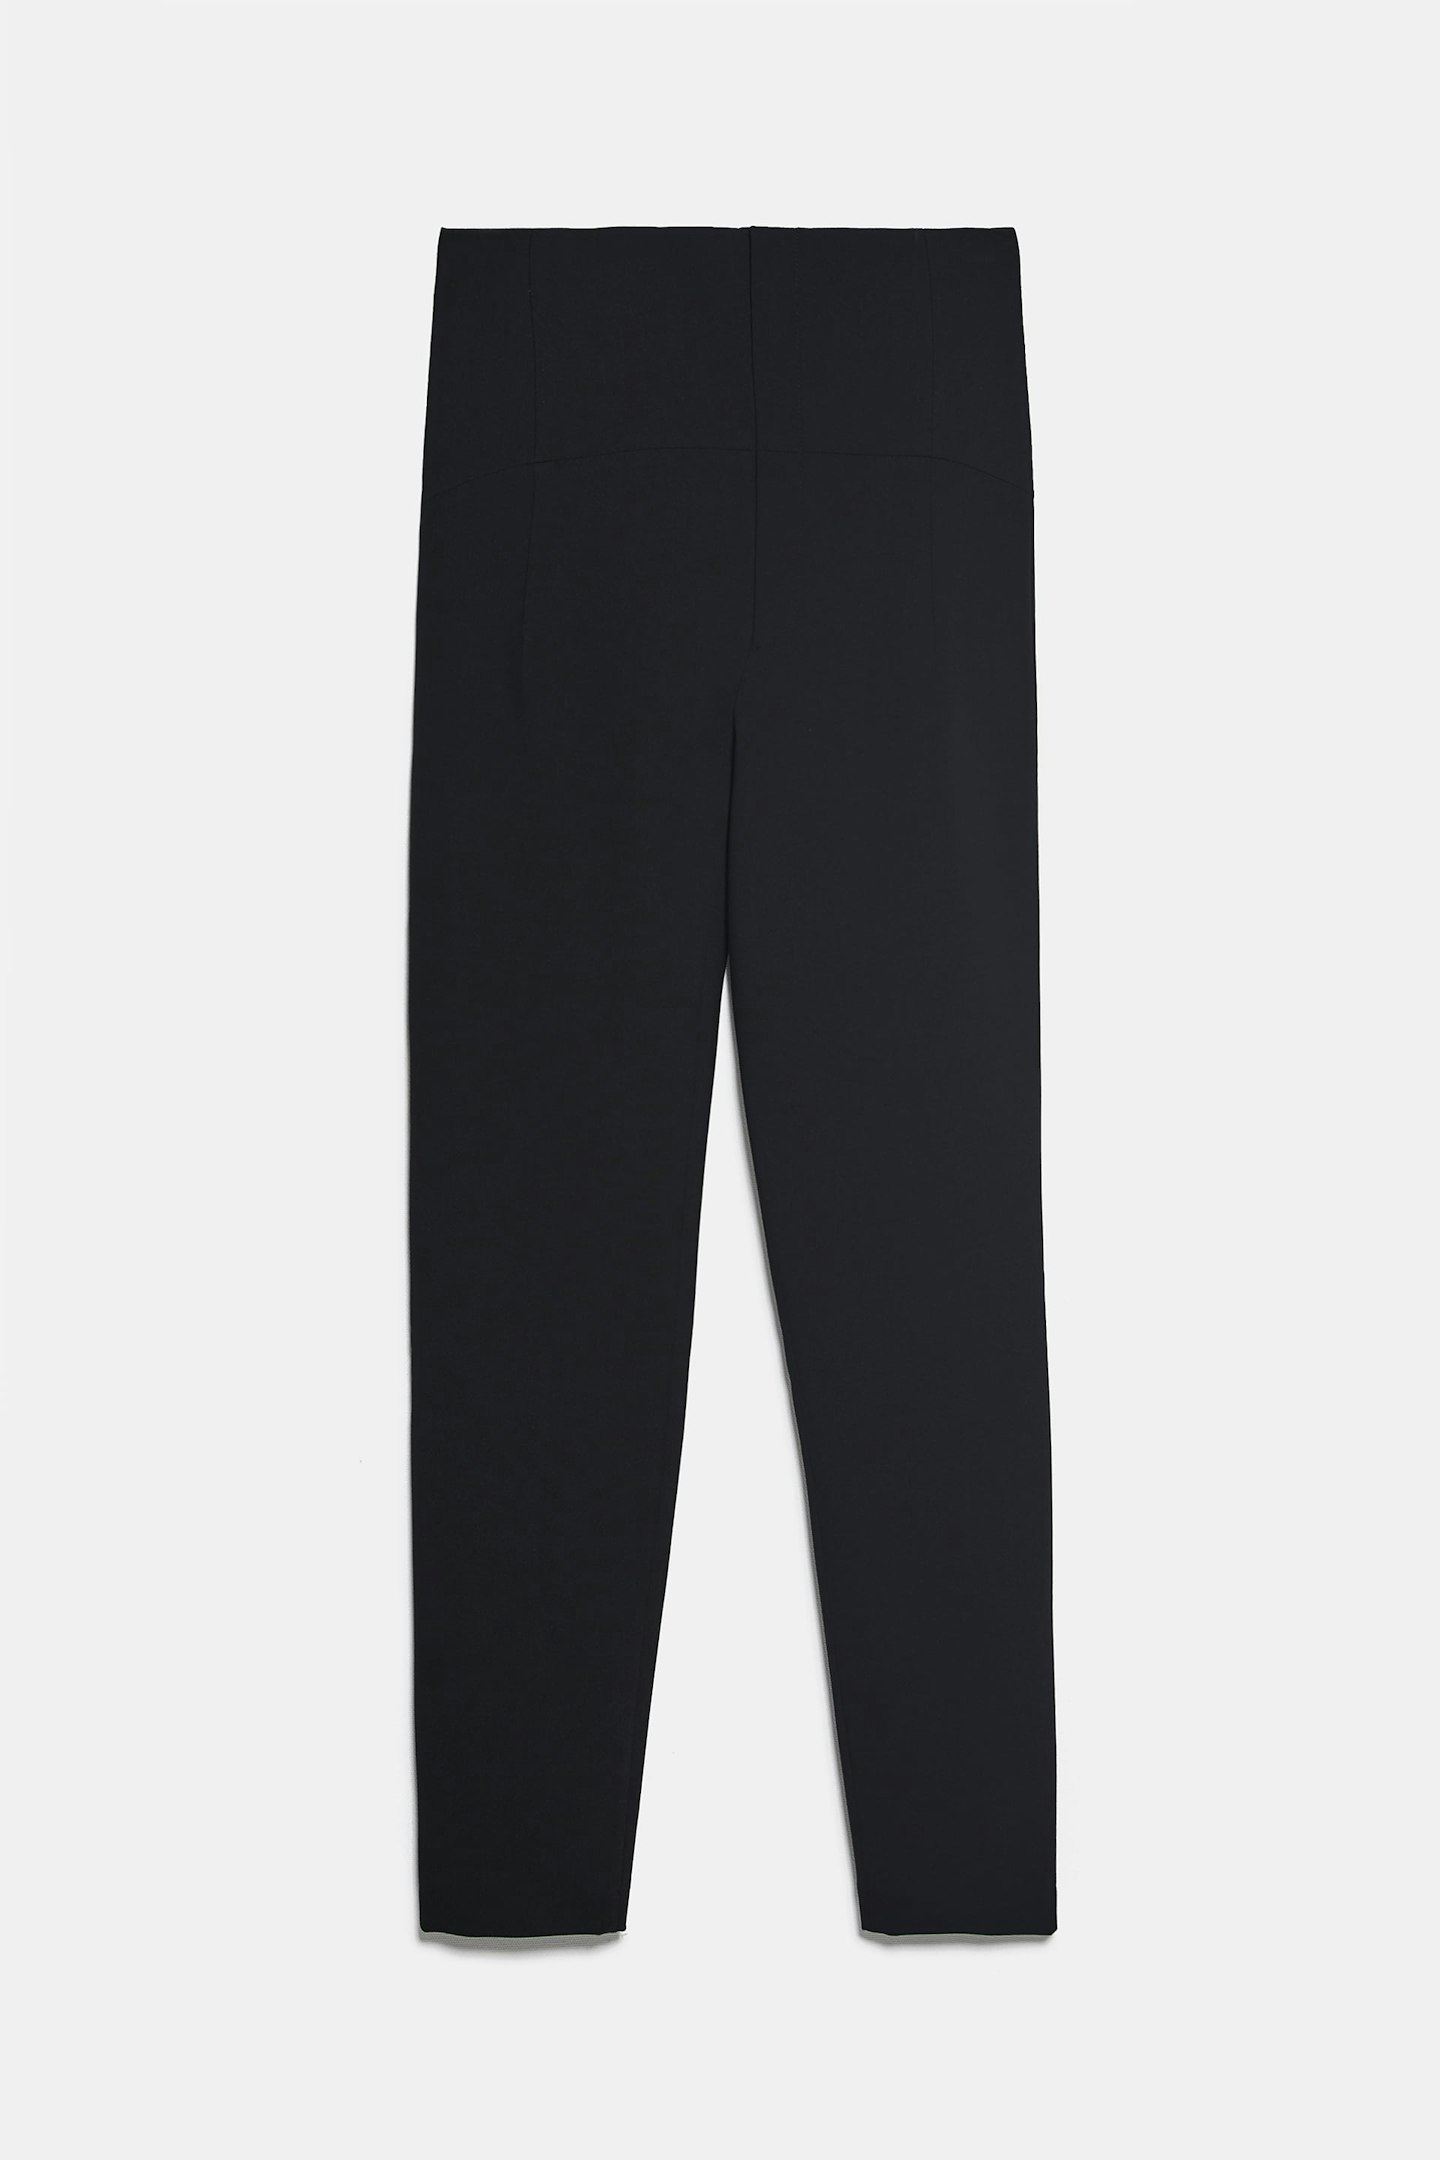 Zara, High Waist Trousers, £29.99